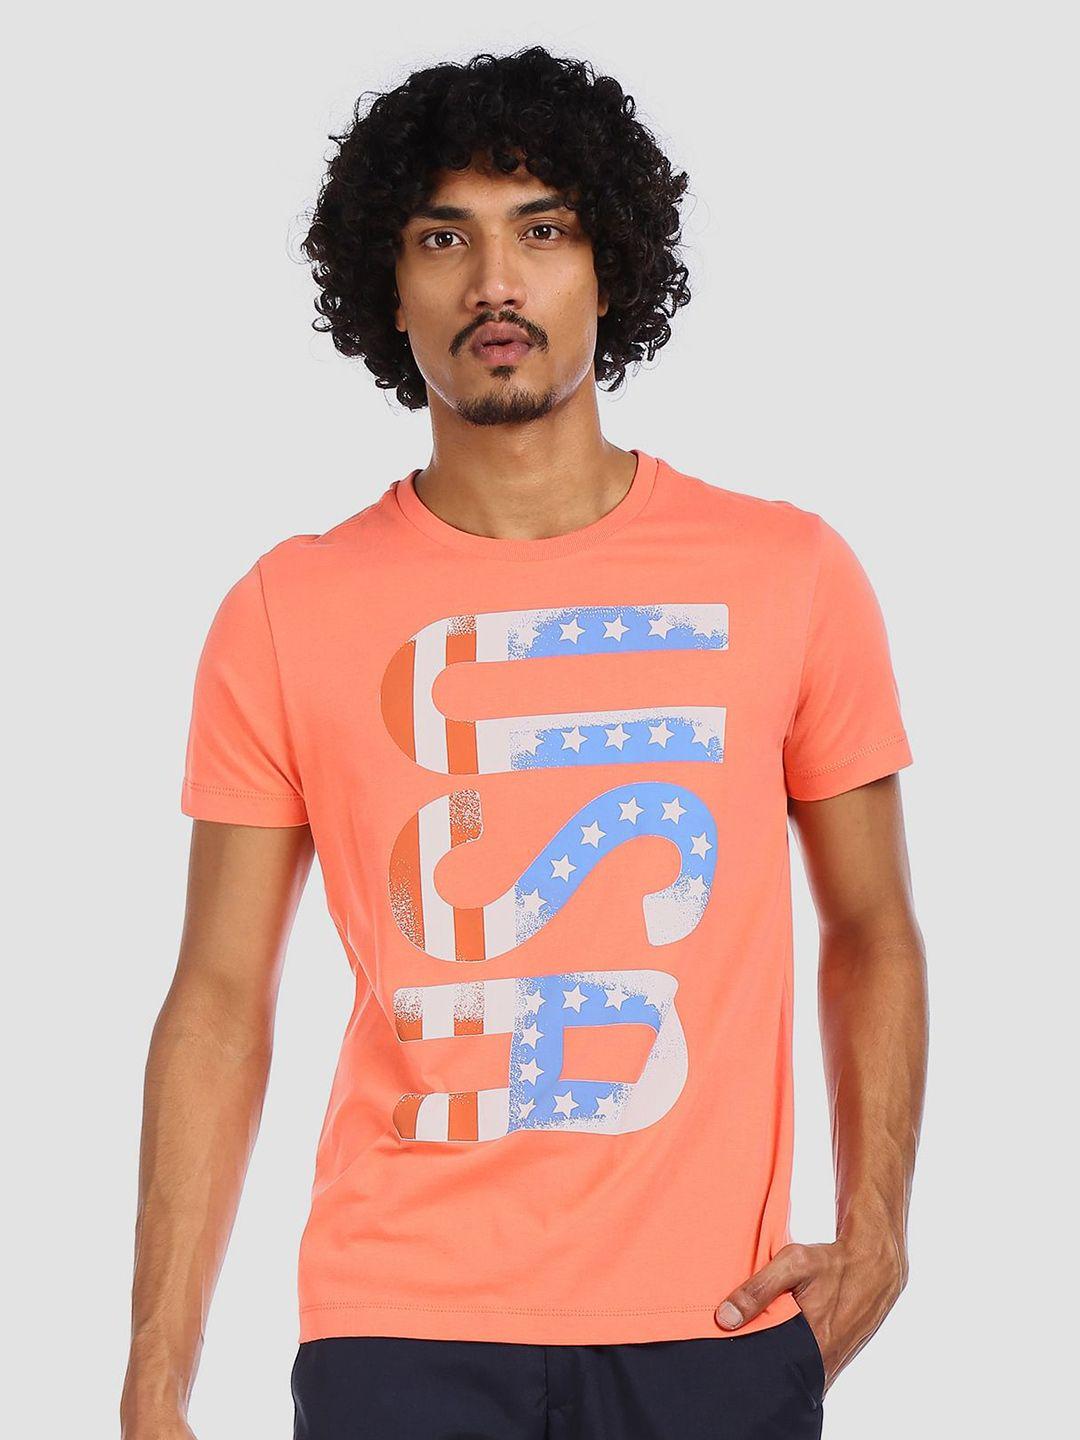 u.s. polo assn. denim co. men coral orange muscle fit printed round neck pure cotton t-shirt